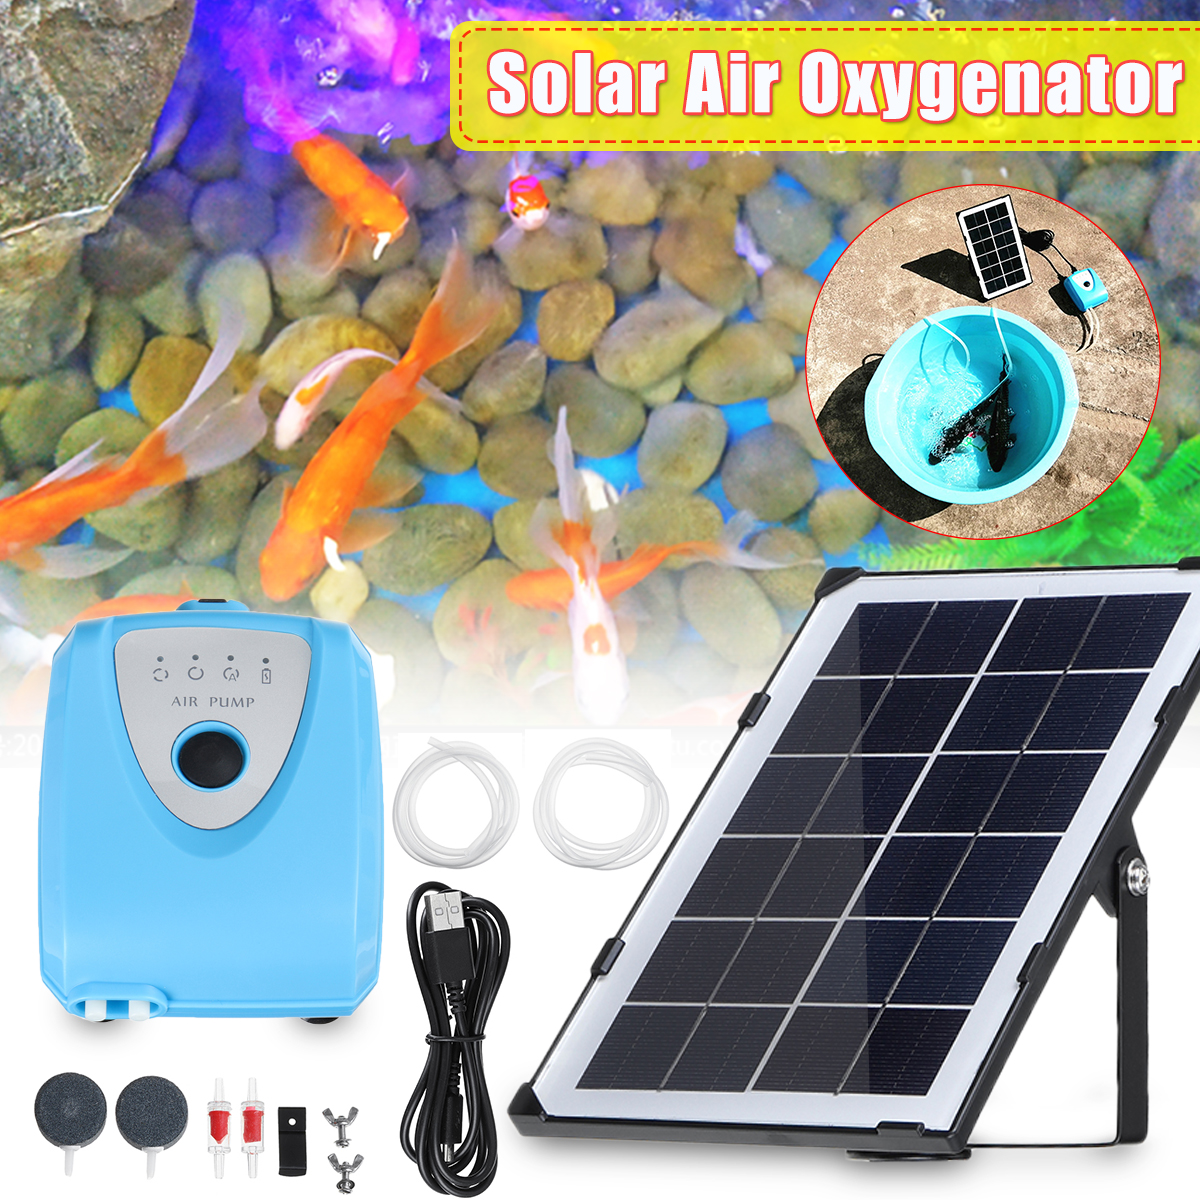 Solar-Powered-Panel-Air-Oxygenator-Pond-Fish-Air-Pump-Aerator-Fish-Tank-Pond-1639700-1